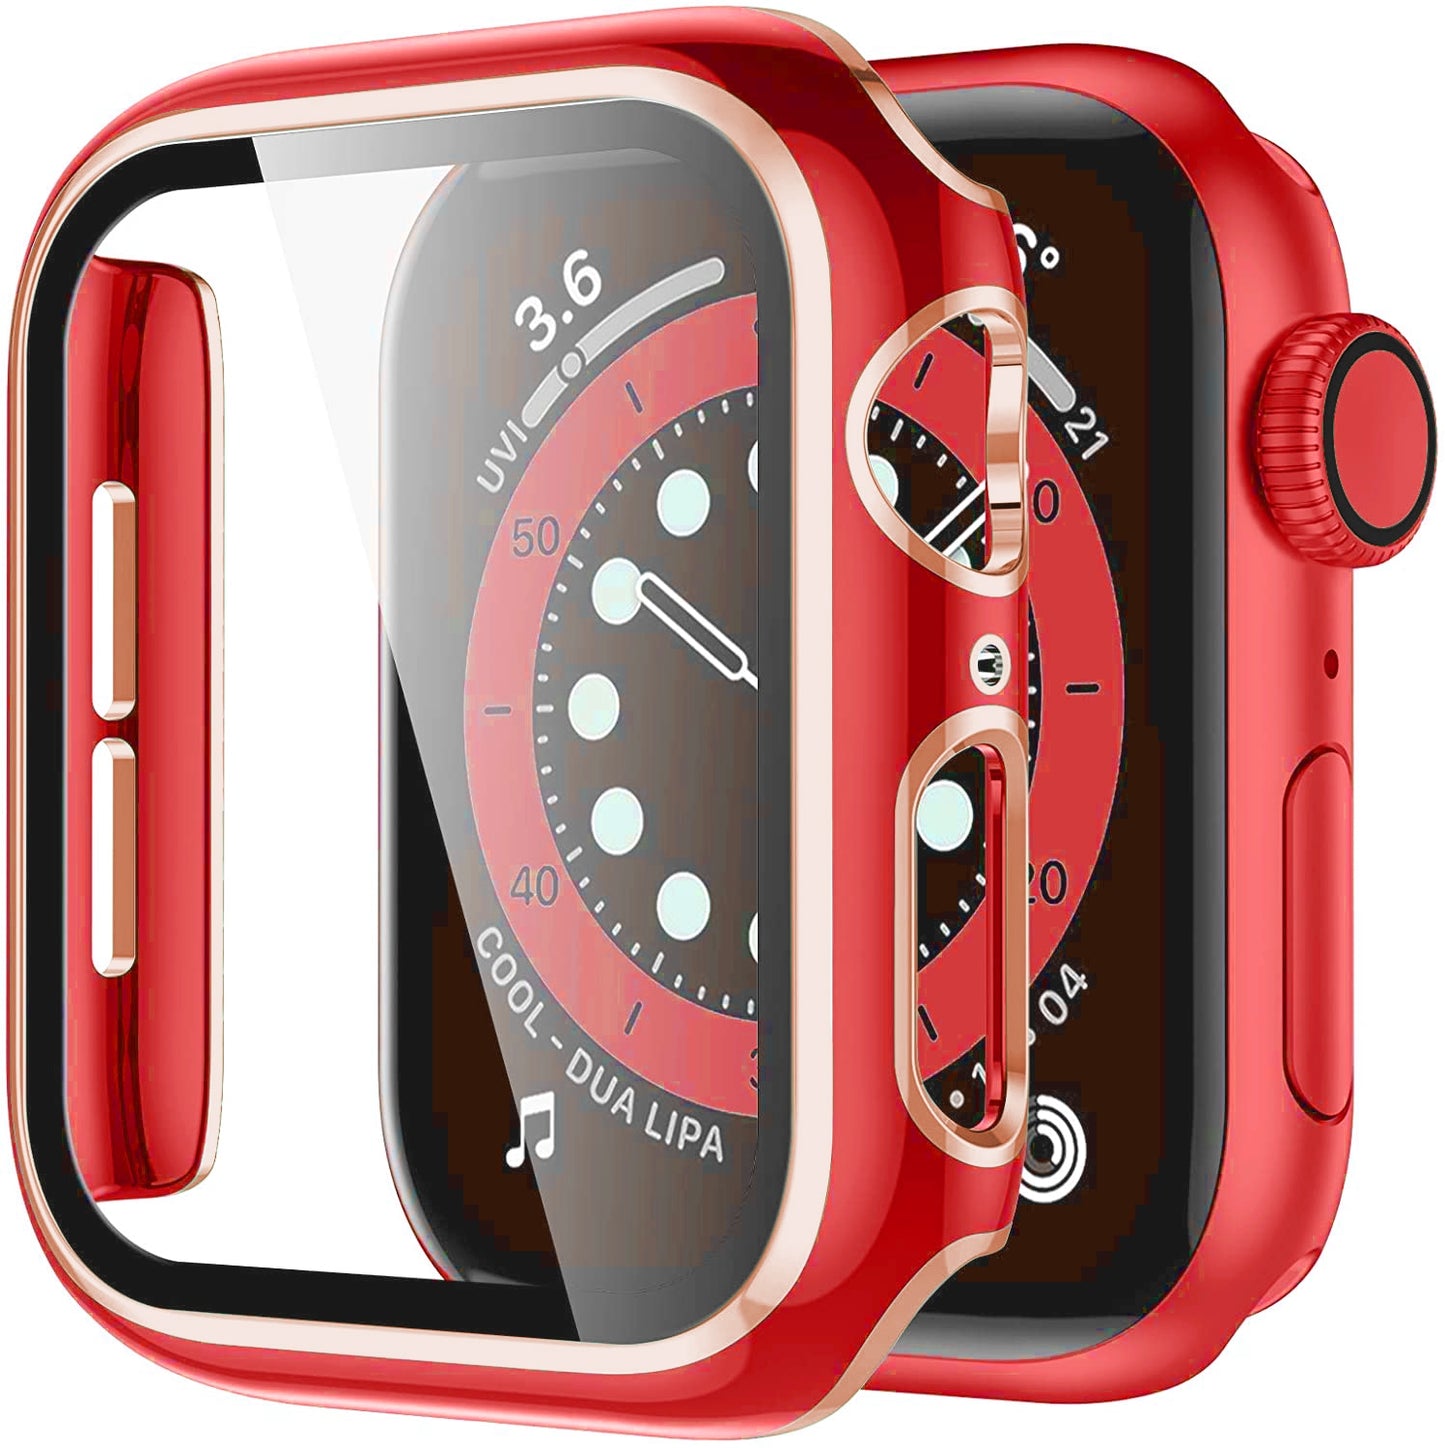 Diamond ™ - Protector + lámina Apple Watch - ENGLA Chile ® red rose / 38mm series 321